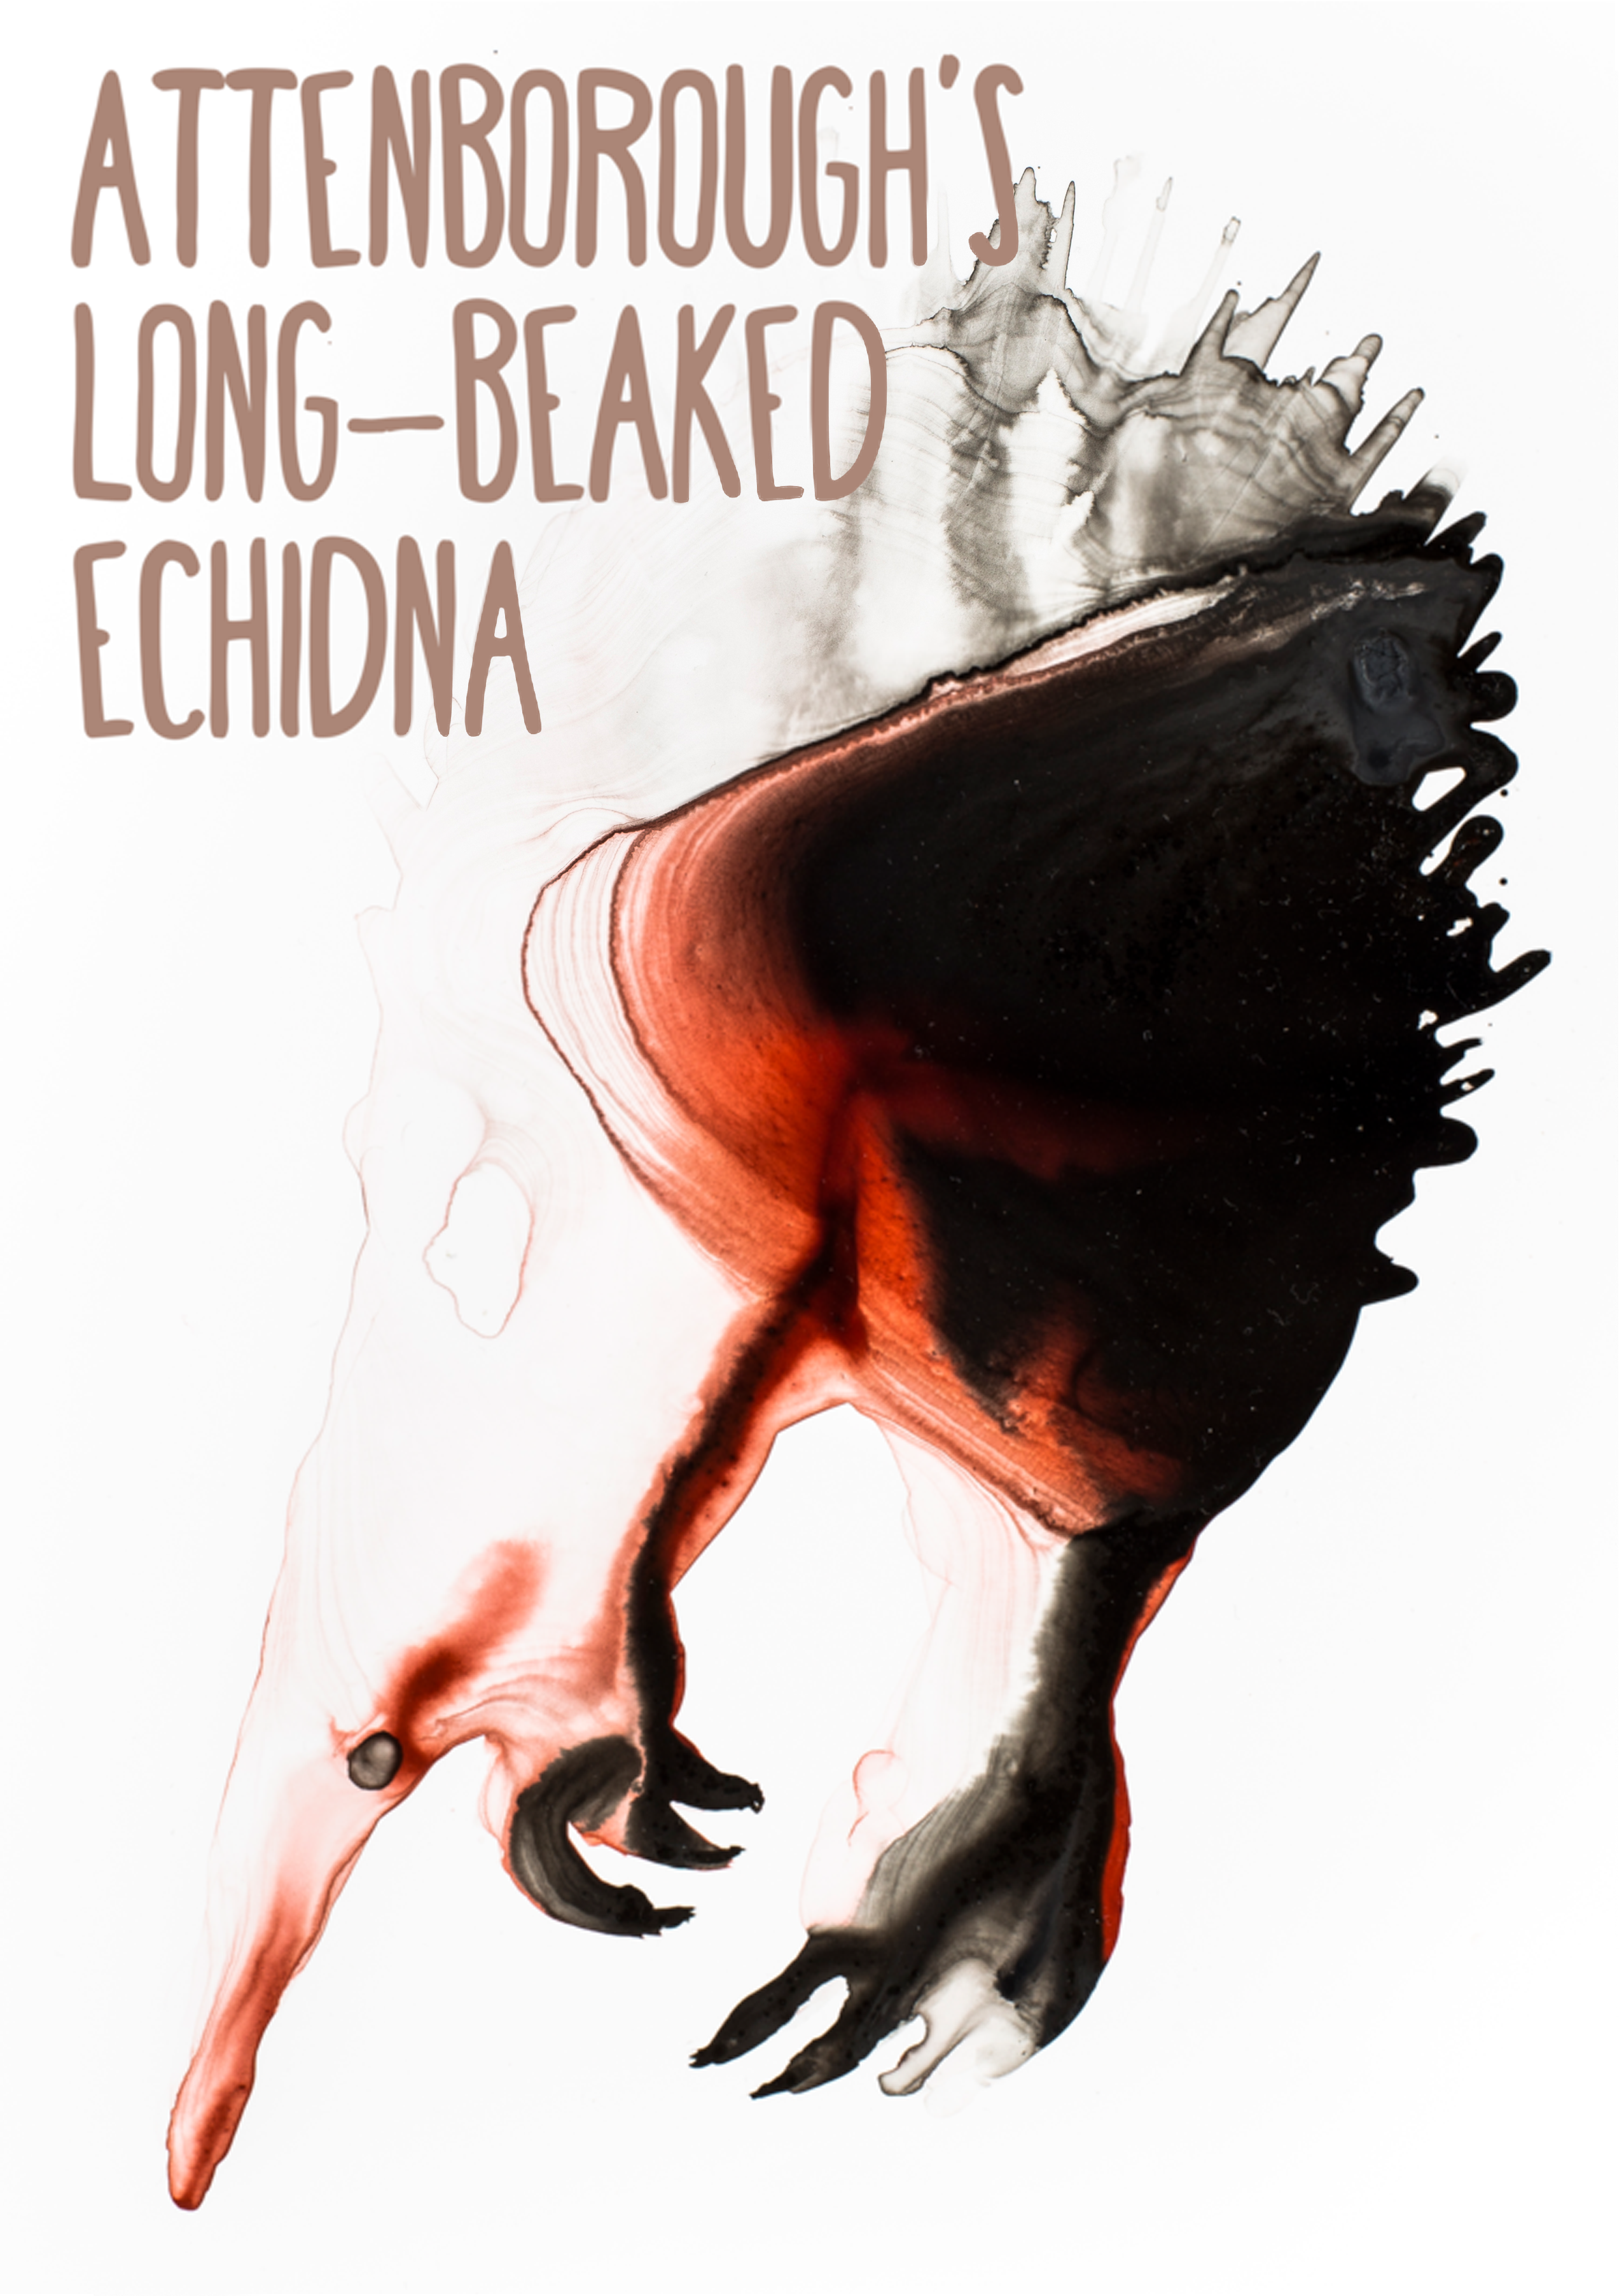 Attenborough's Long-beaked Echidnea lost species artwork